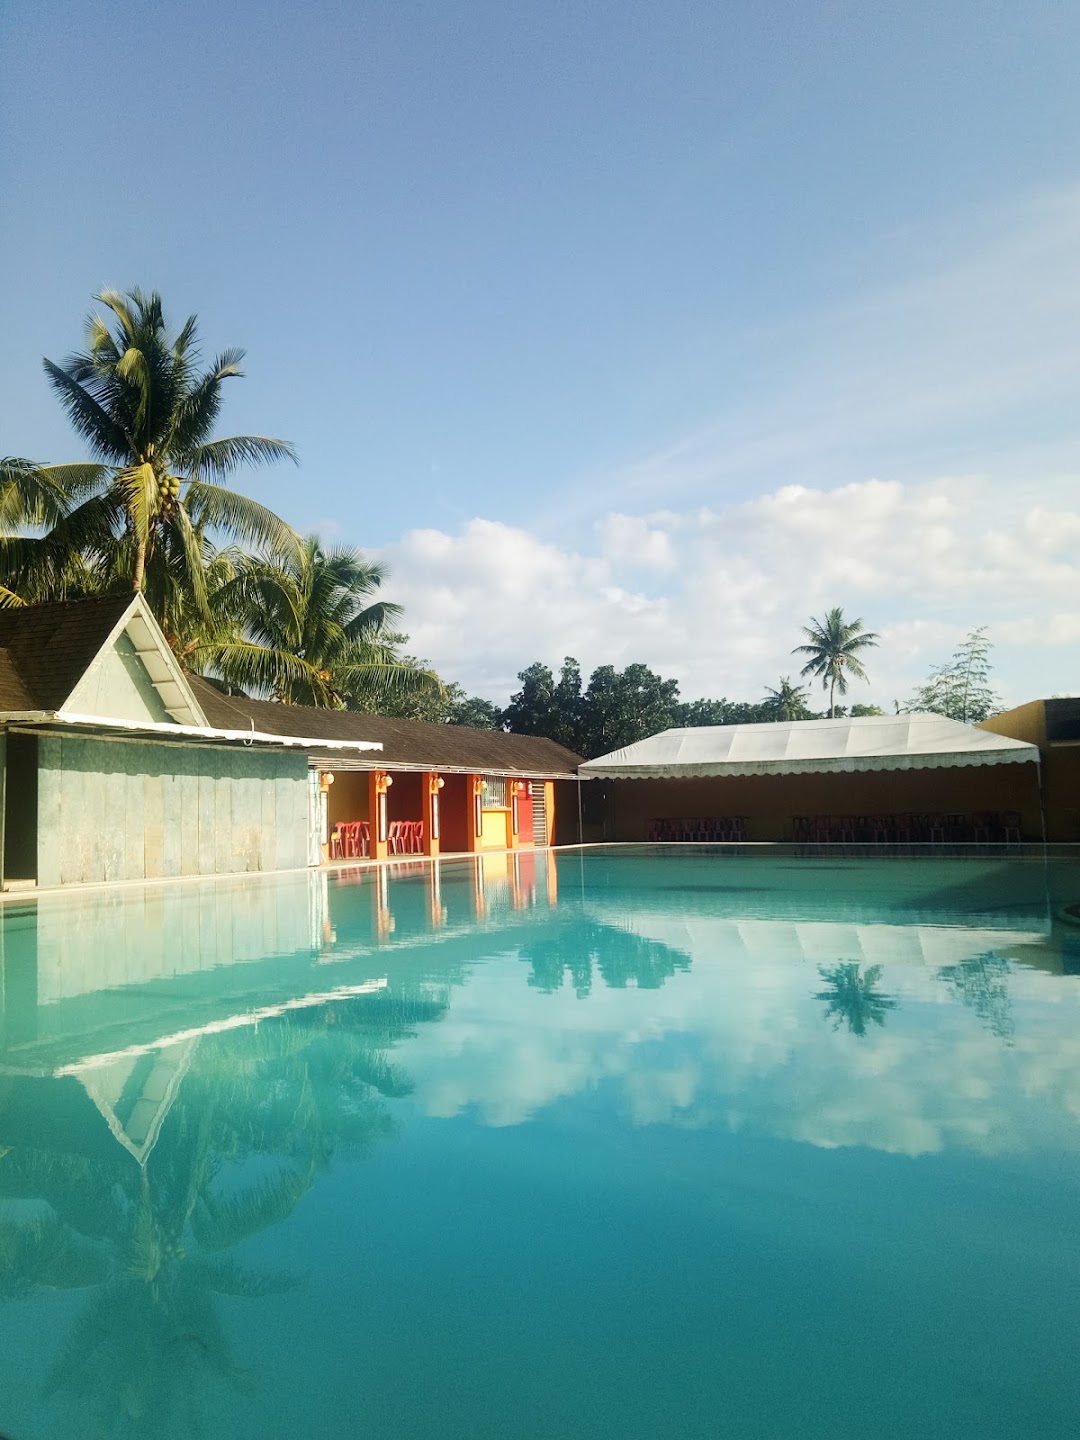 Mira Villa Seafood Restaurant and Resort Swimming Pool